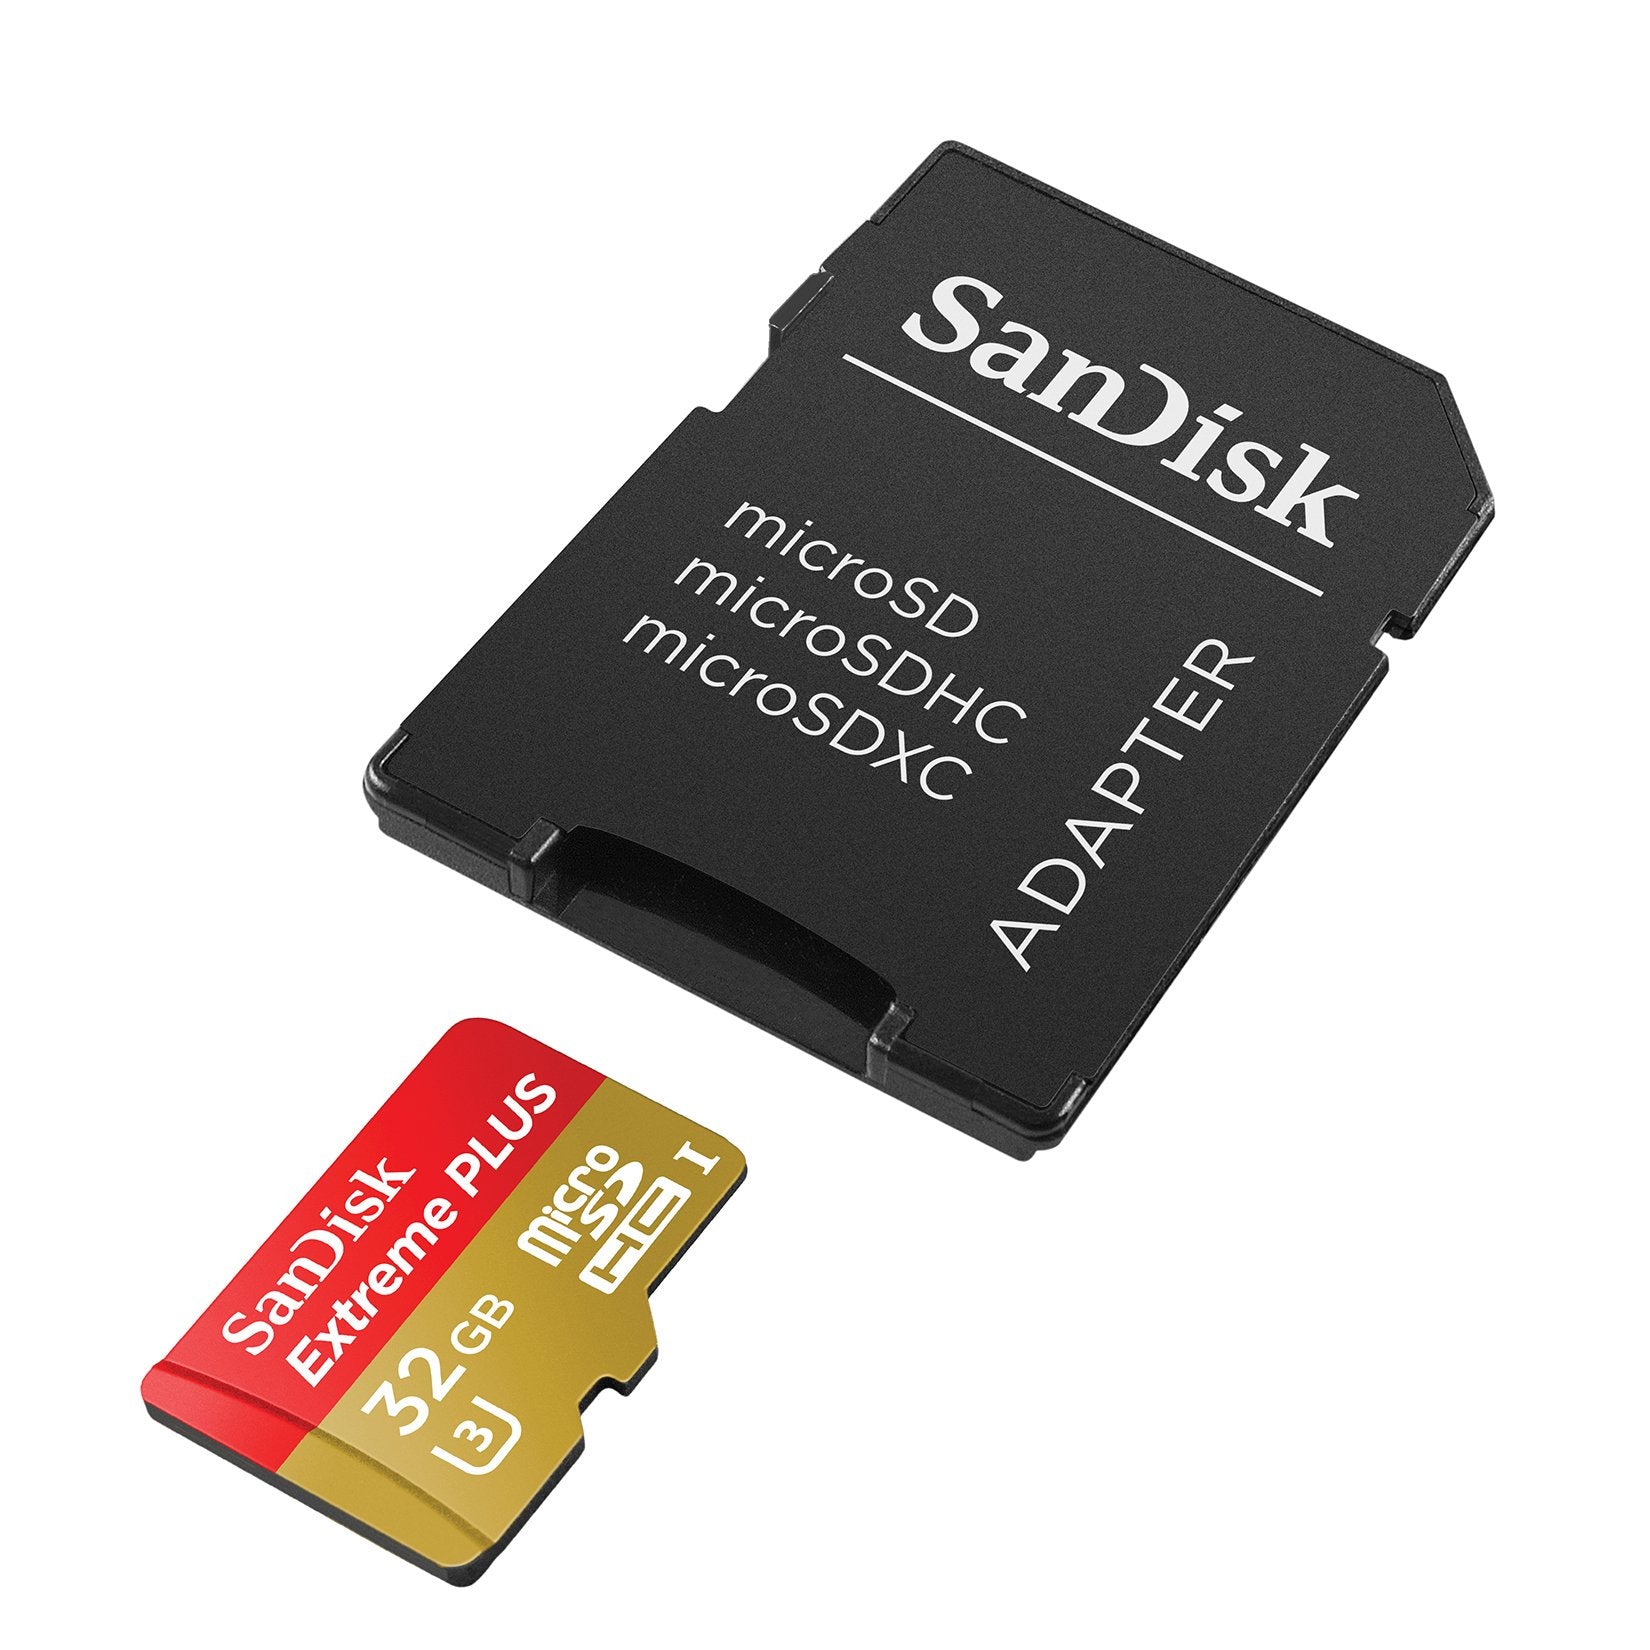 SanDisk Extreme PLUS 32GB microSDXC UHS-I/U3 Card with Adapter (SDSQXSG-032G-GN6MA)